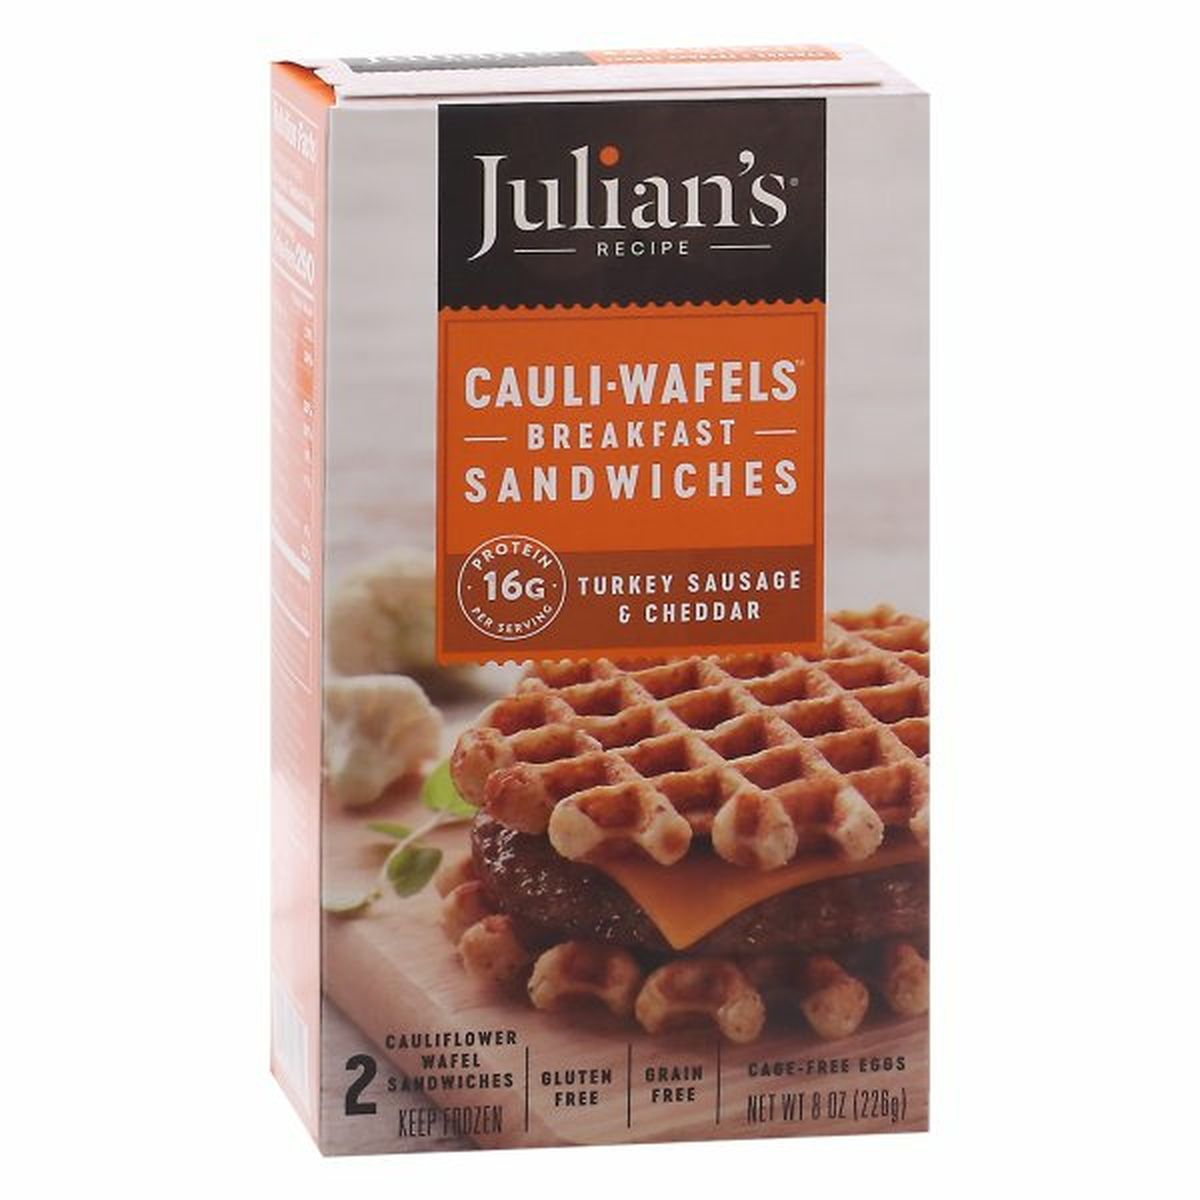 Calories in Julian's Recipe Breakfast Sandwiches, Turkey Sausage & Cheddar, Cauli-Wafels